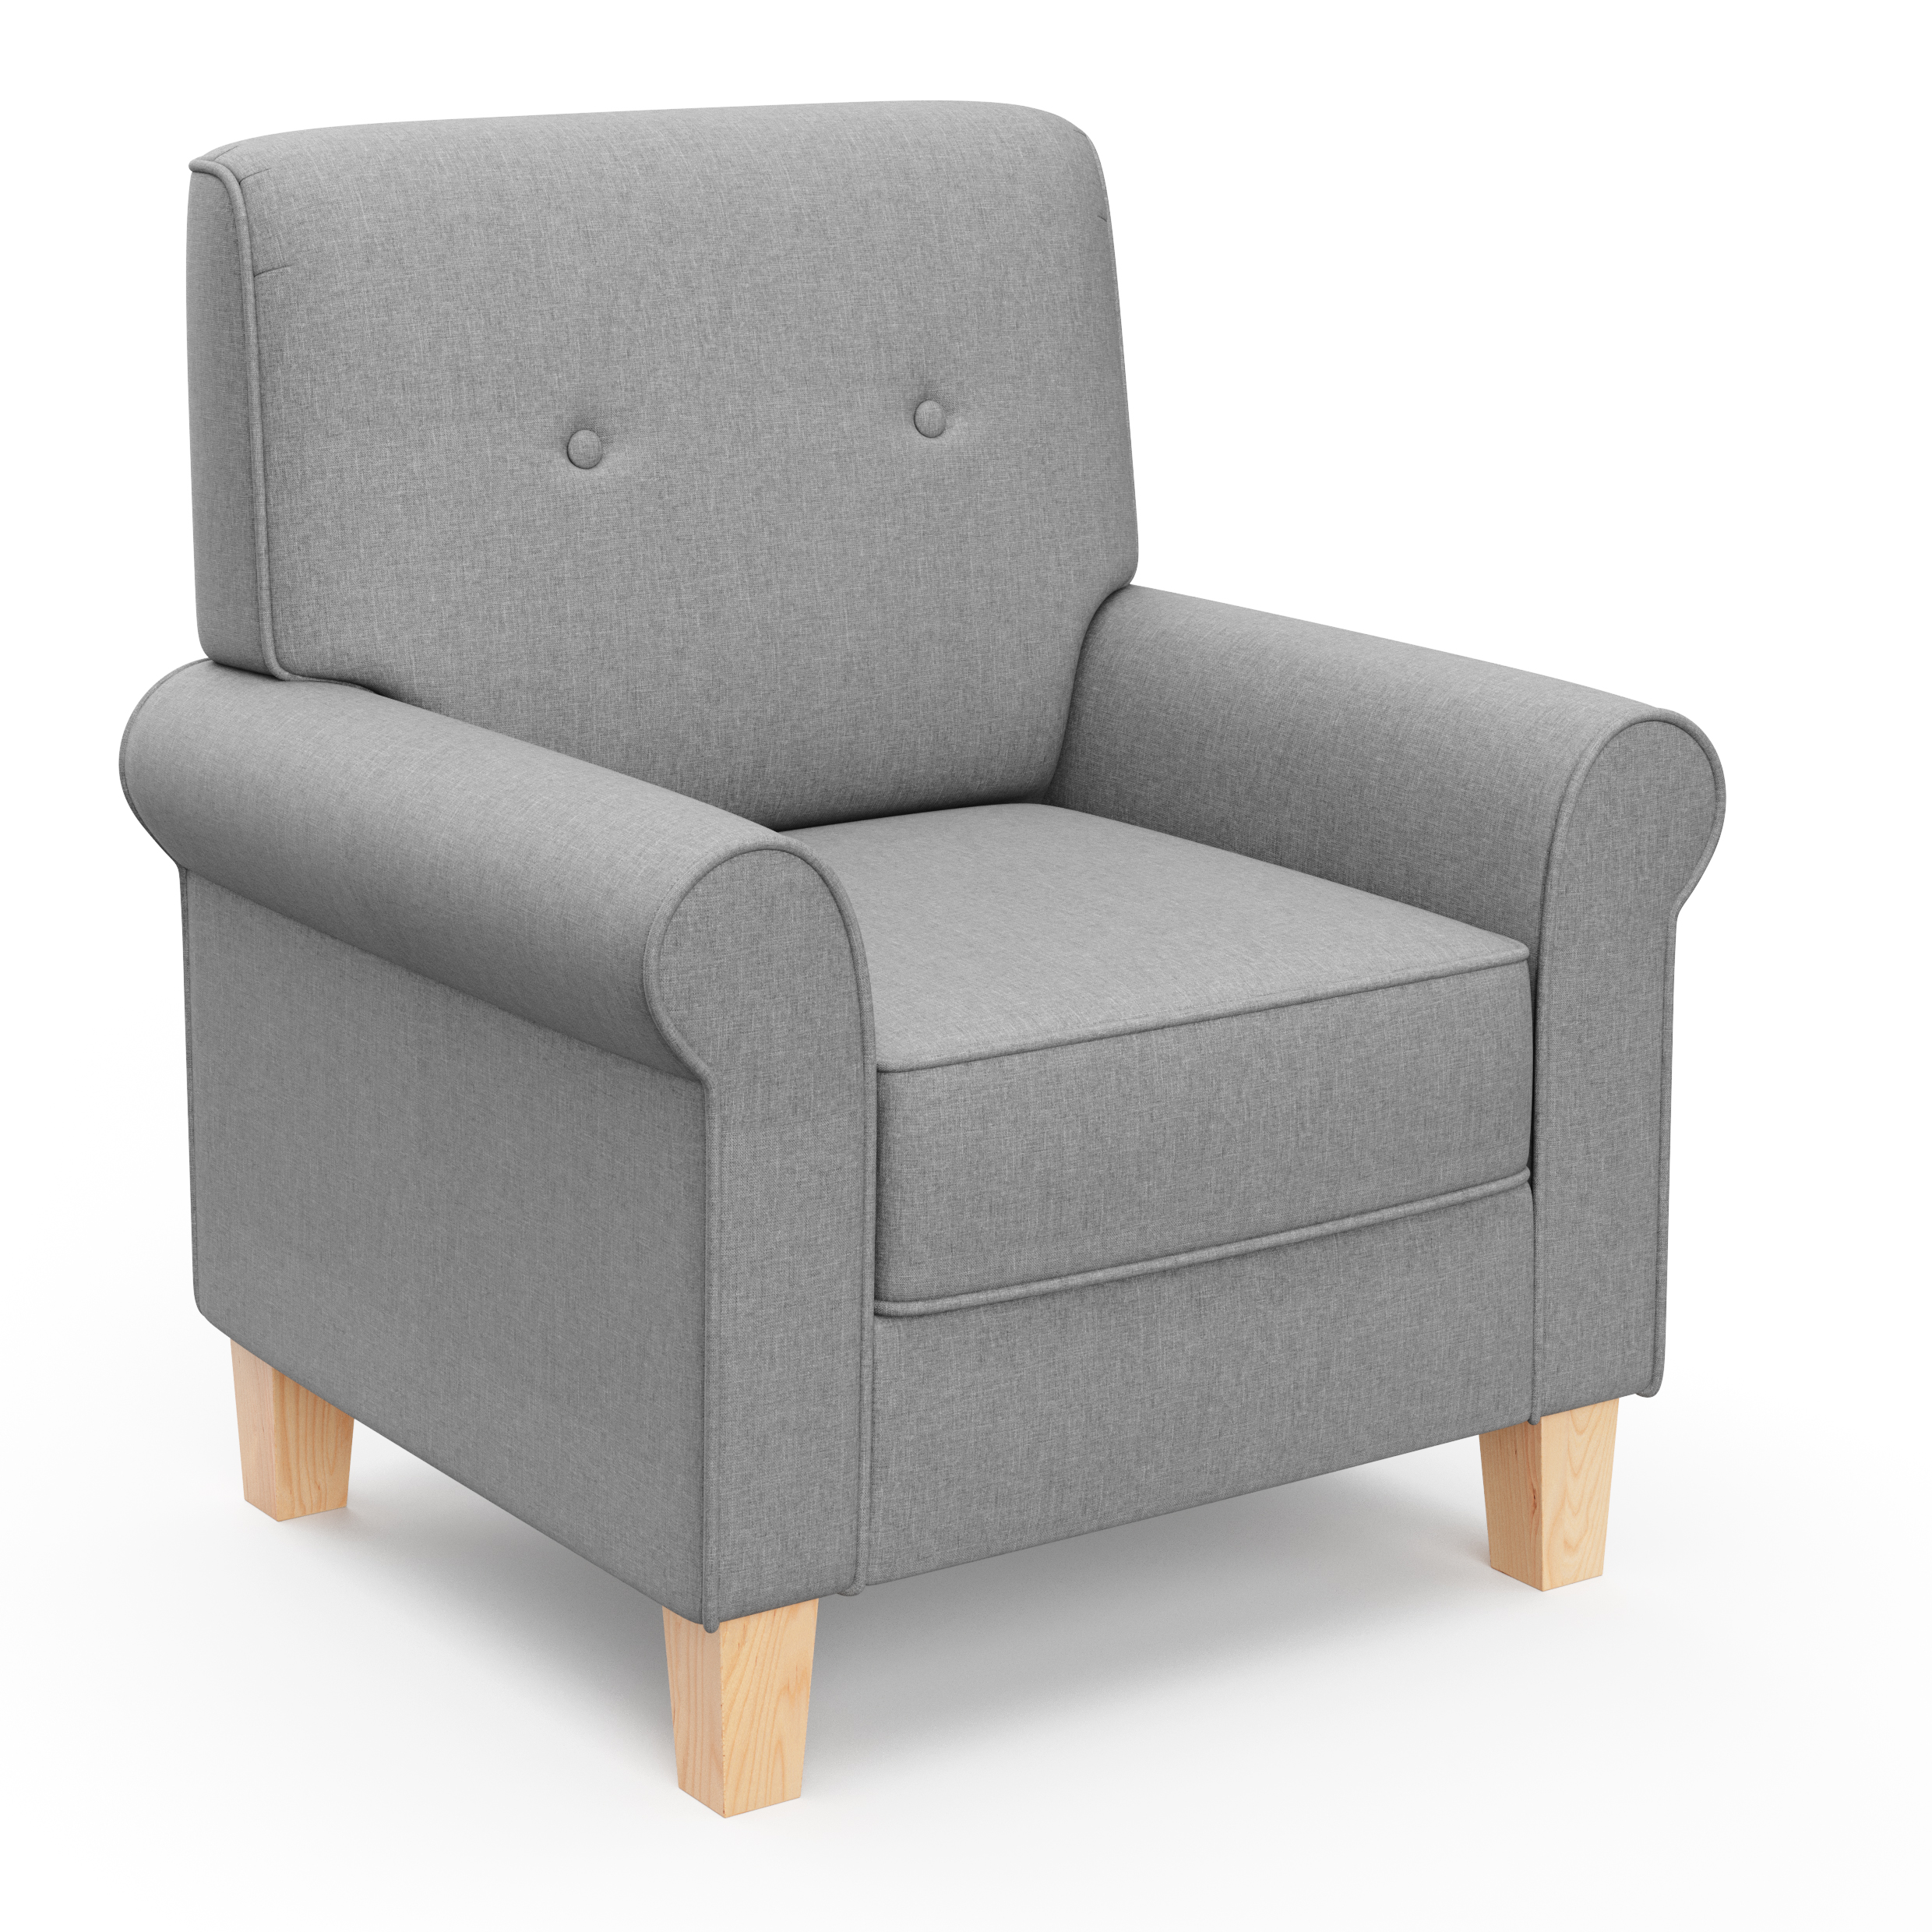 Graco Harper Poly-Linen Indoor Nursery Rocking Chair, Horizon Gray - image 4 of 6